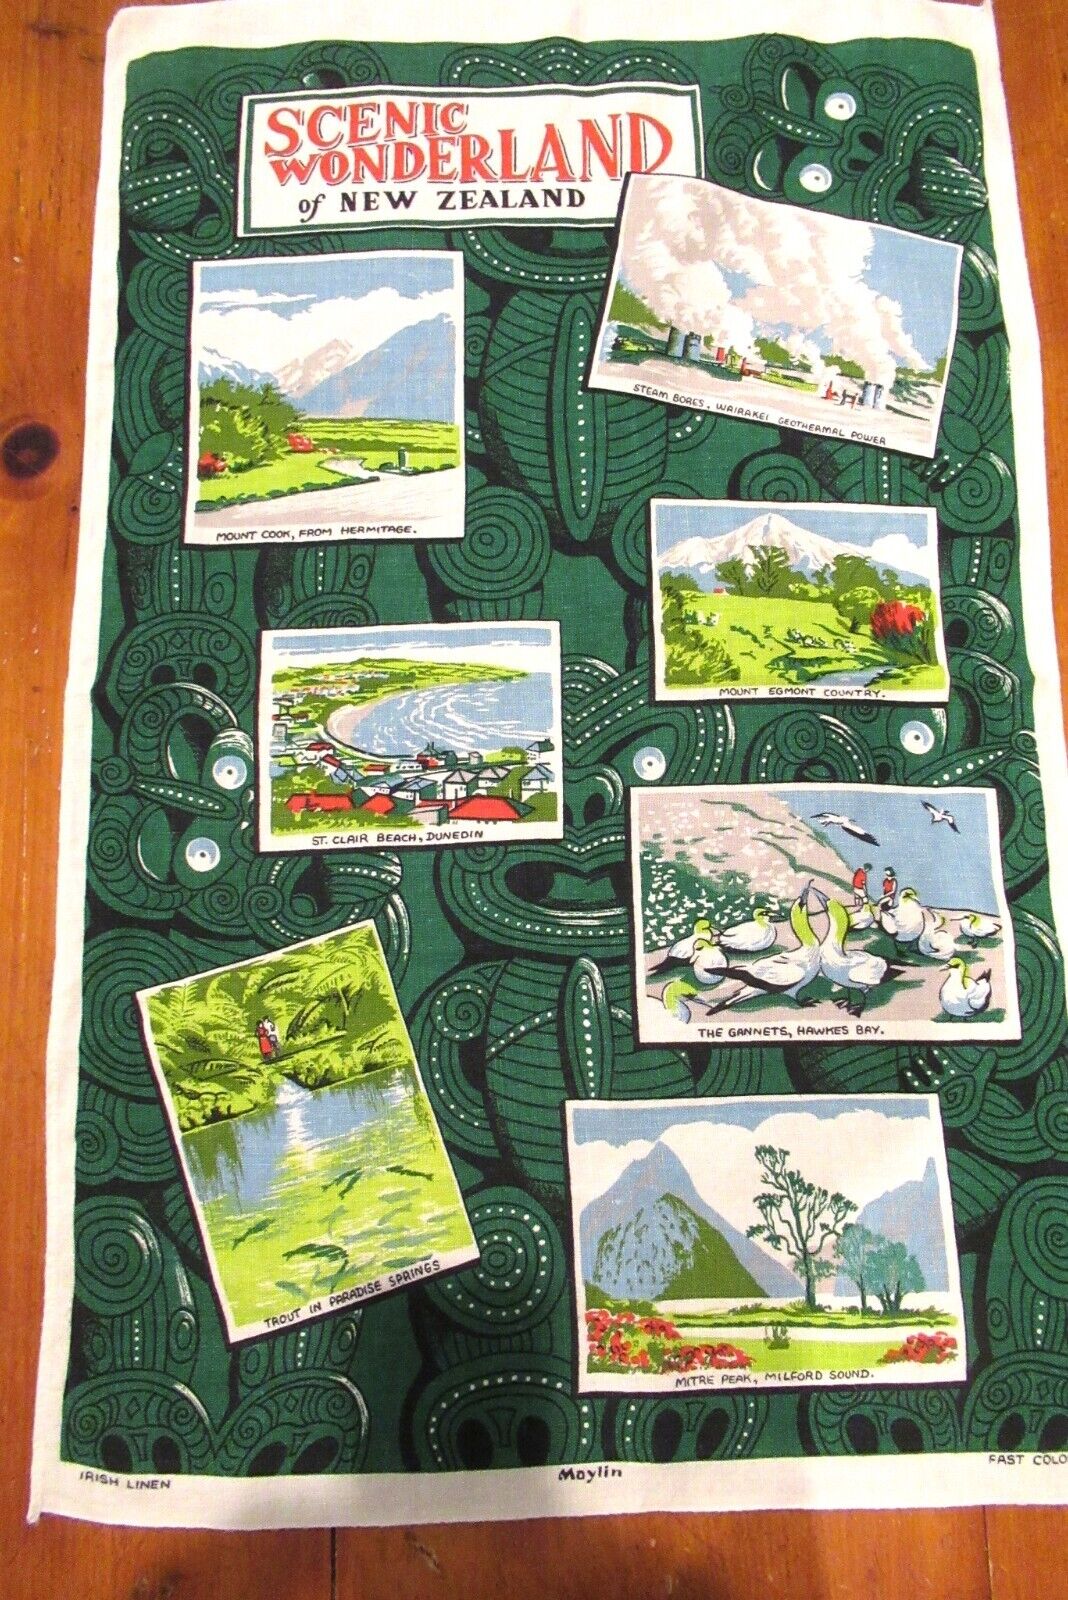 NEW ZEALAND SCENID WONDERLAND souvenir Irish linen hand/tea towel 19x28 NEW